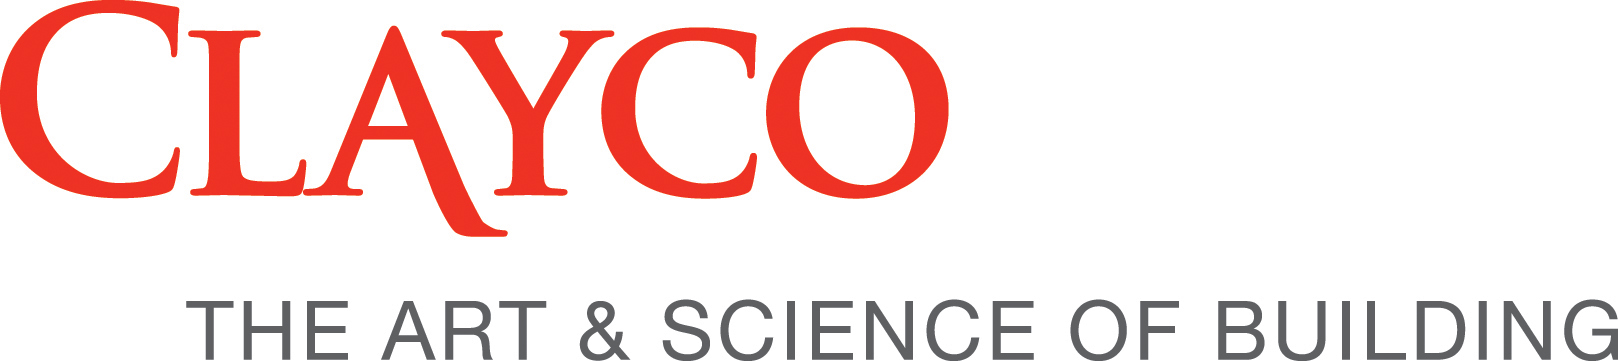 clayco logo